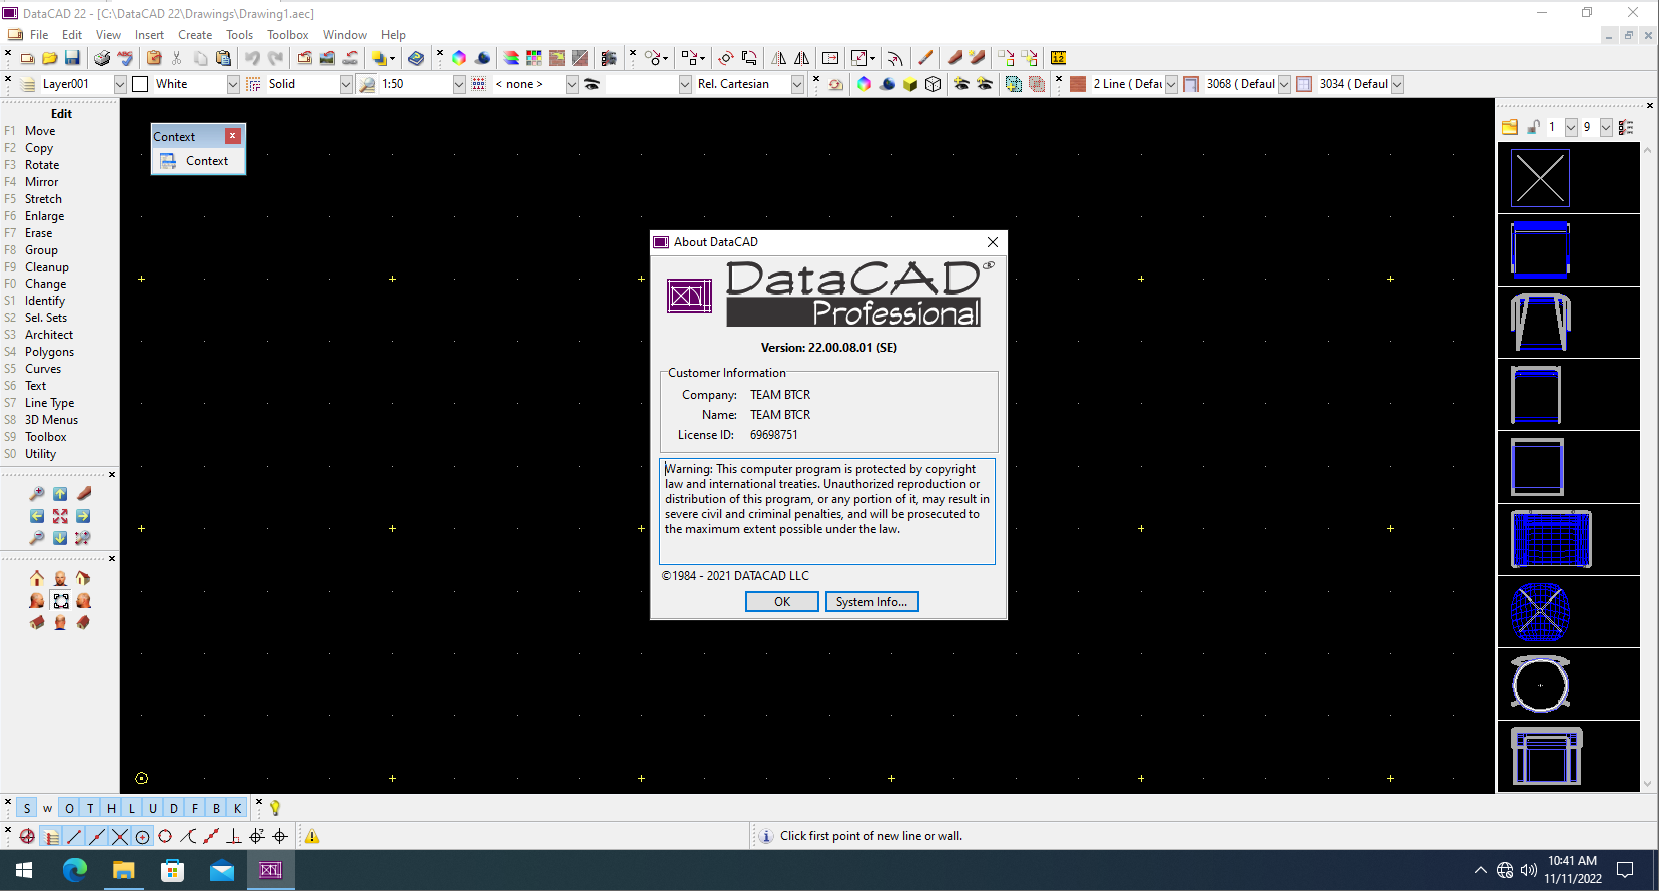 Working with DataCAD 2022 v22.00.08.01 (SE) full license